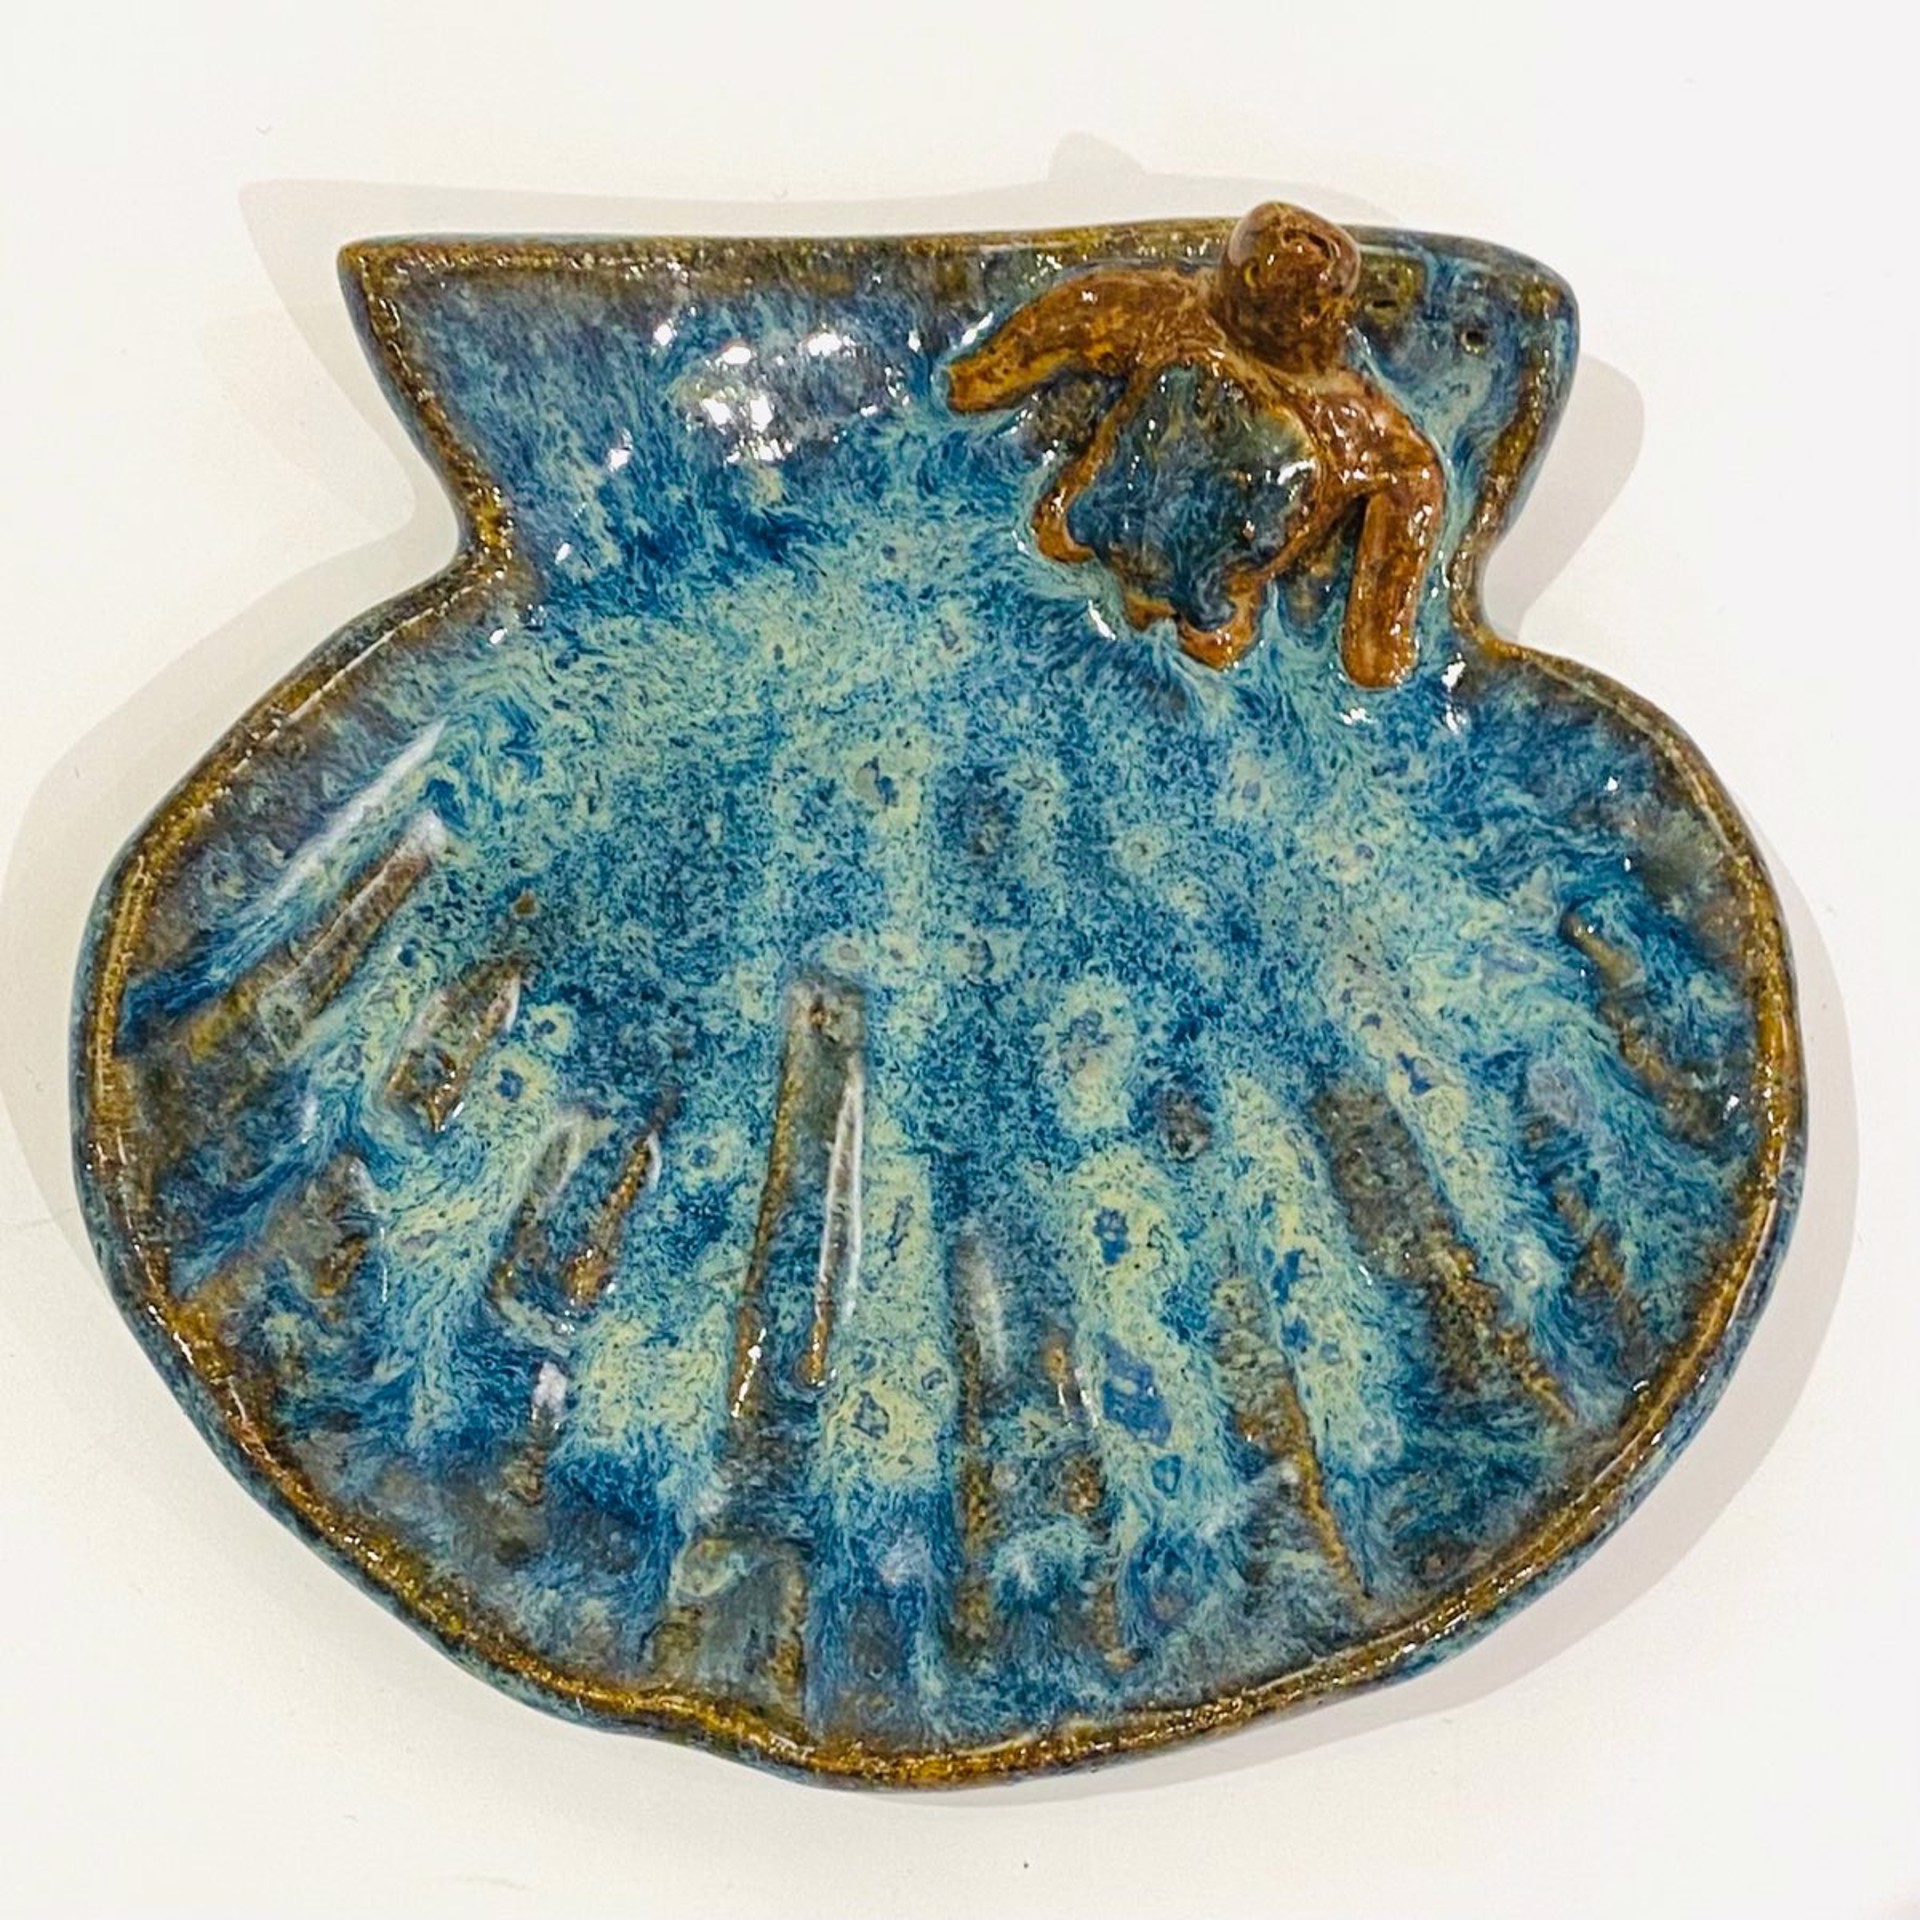 LG22-928 Scallop Shell Dish with Turtle (Blue Glaze) by Jim & Steffi Logan